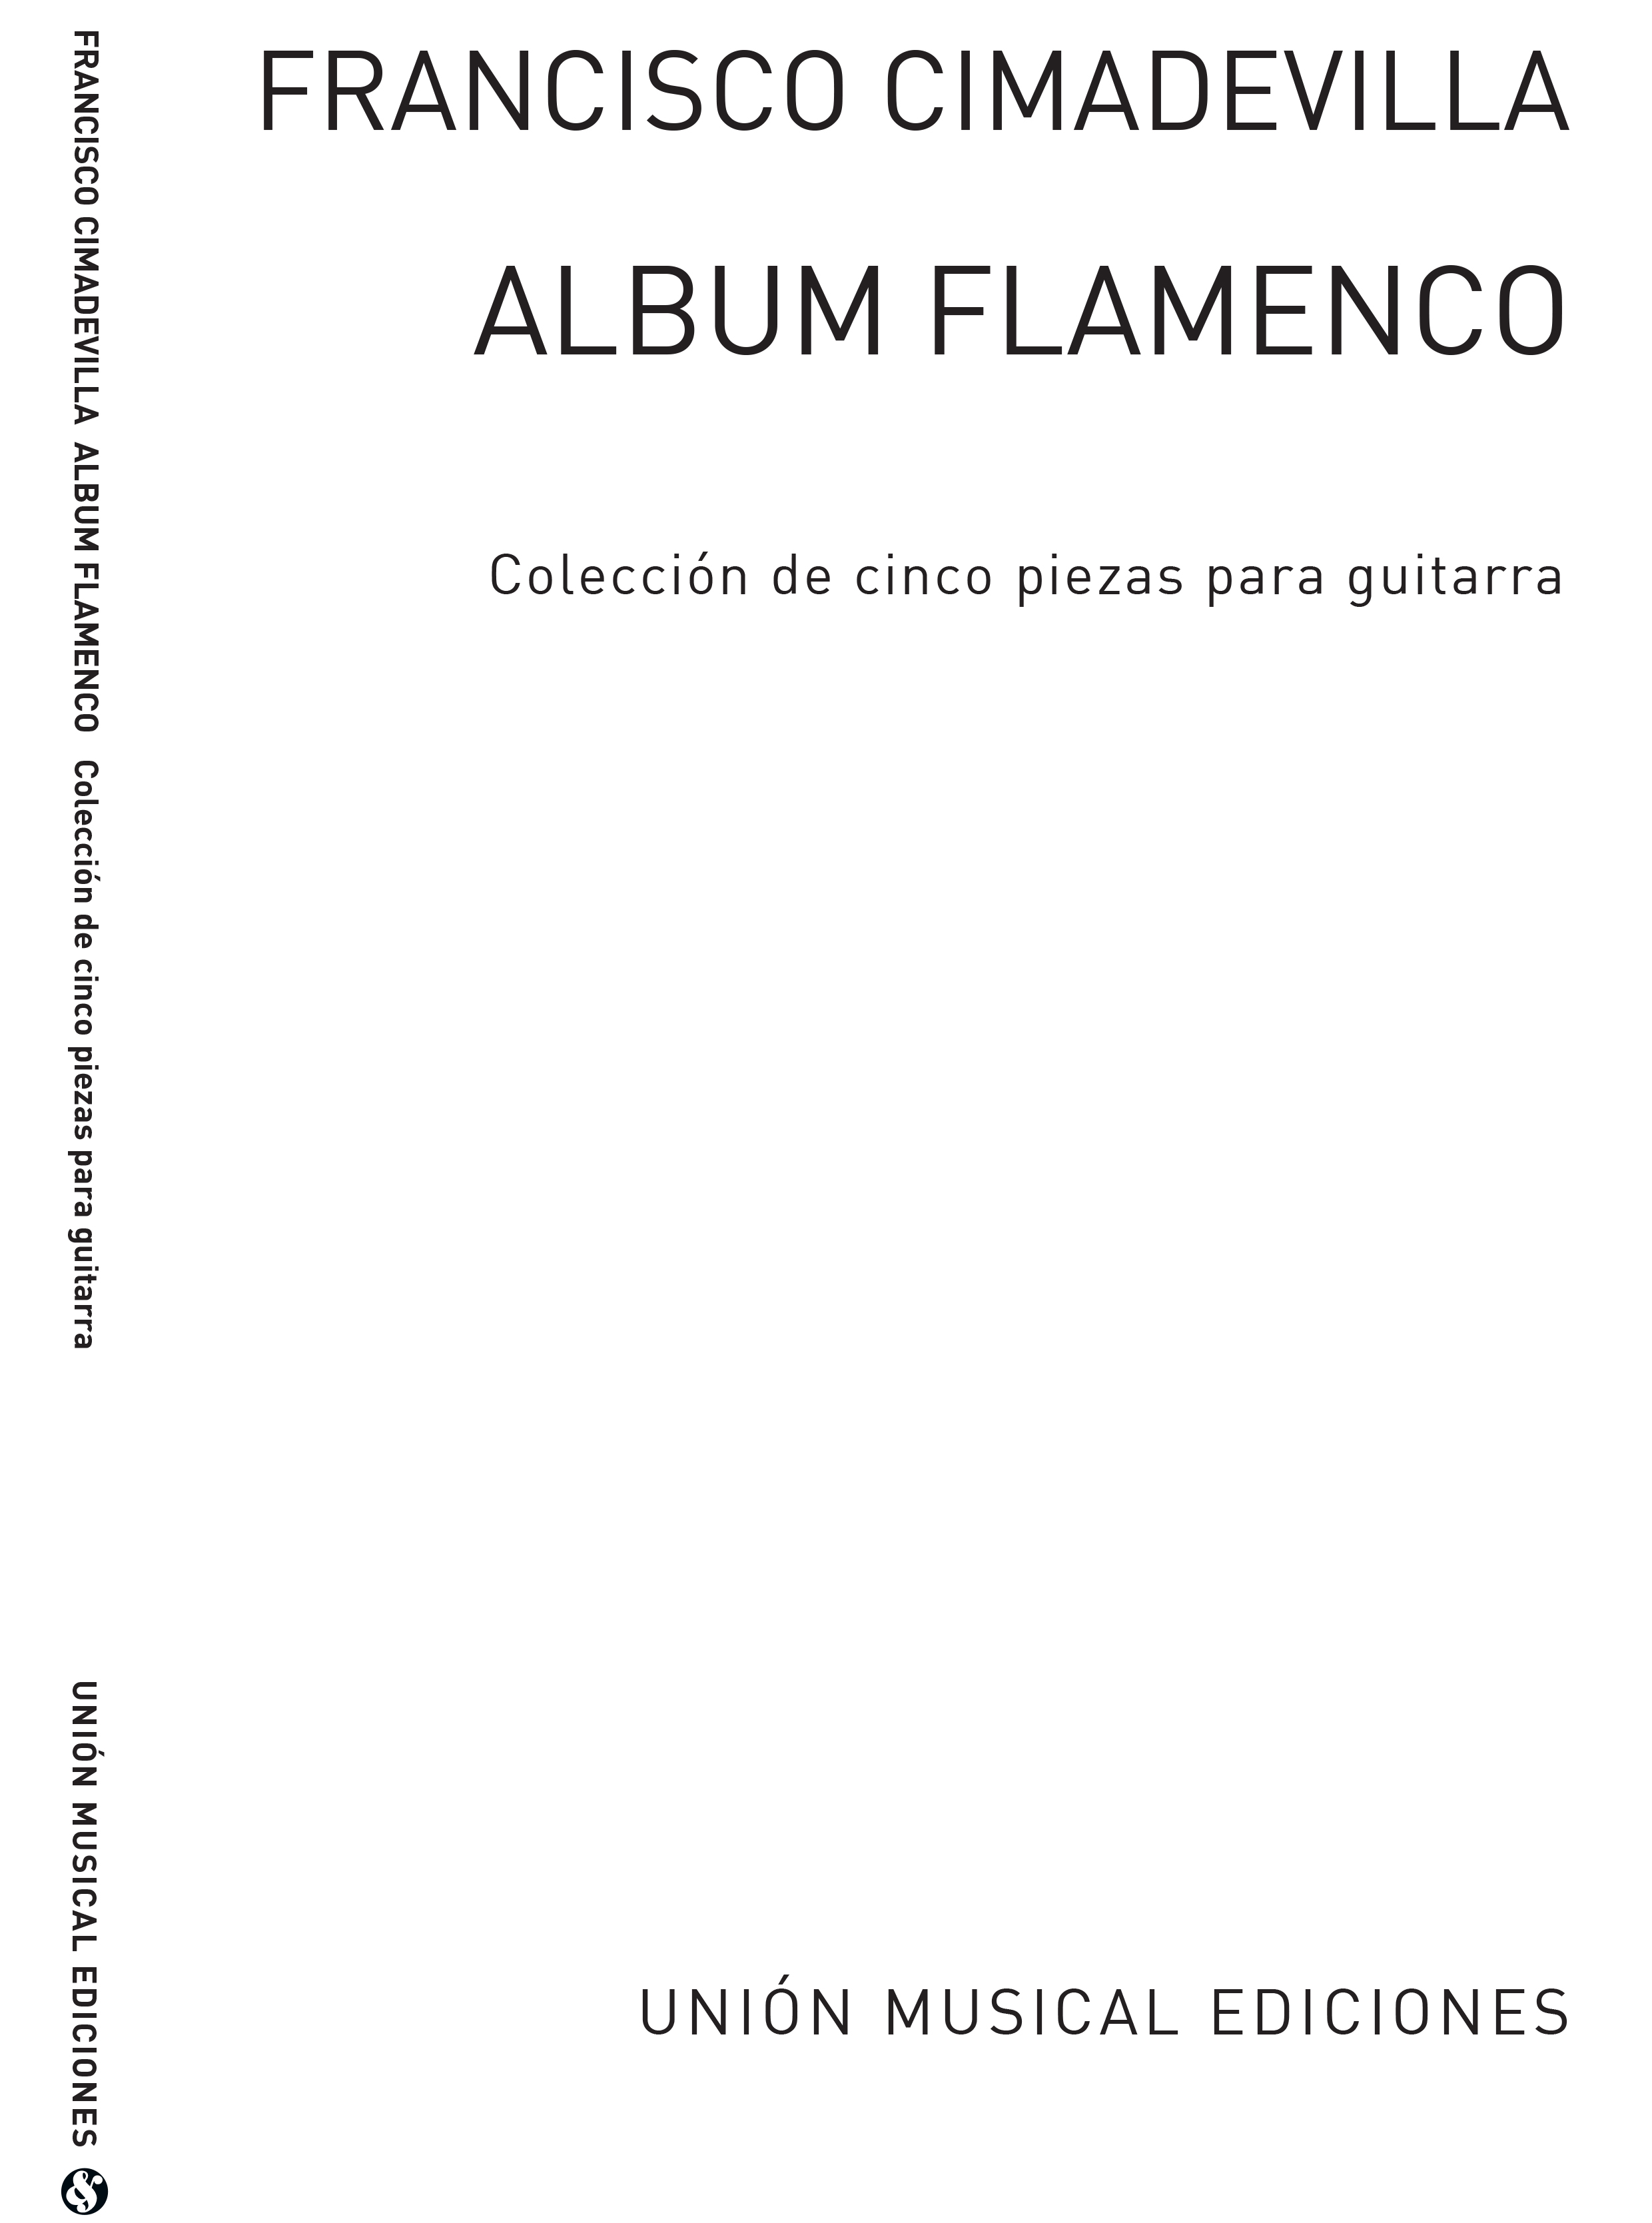 Francisco Cimadevilla: Album Flamenco Guitar: Guitar: Instrumental Album